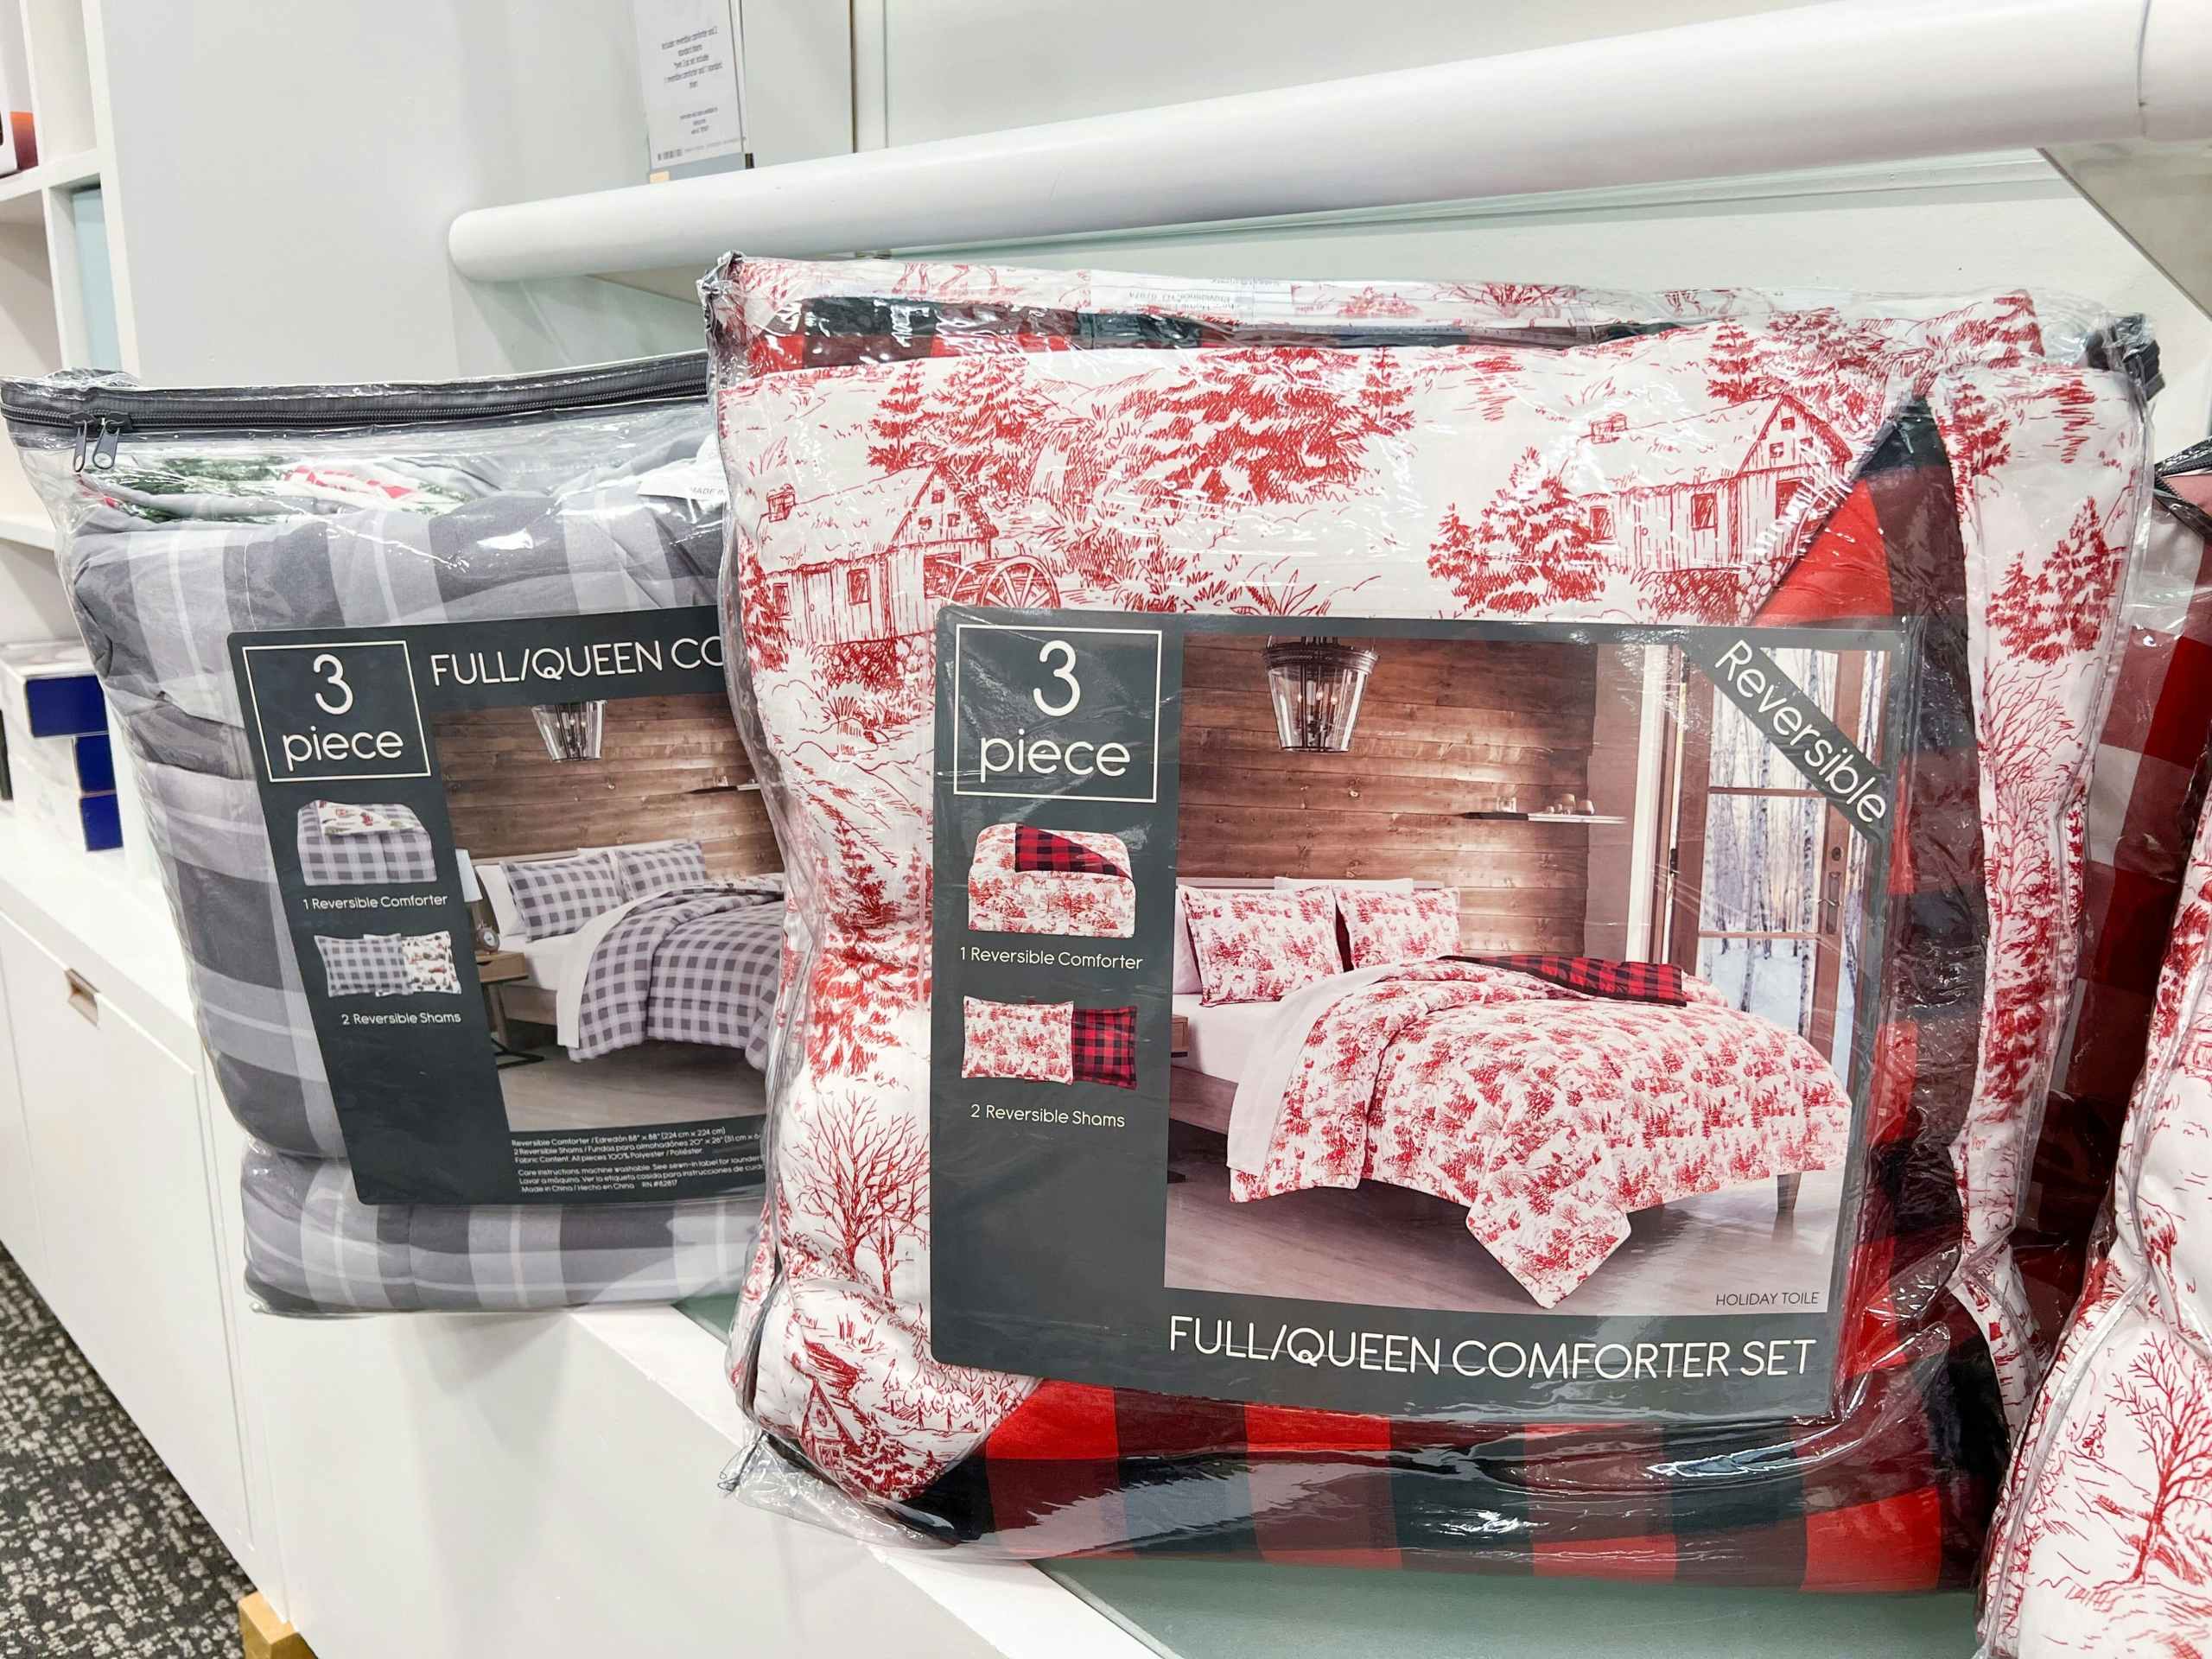 3-piece comforter sets on a shelf in macys